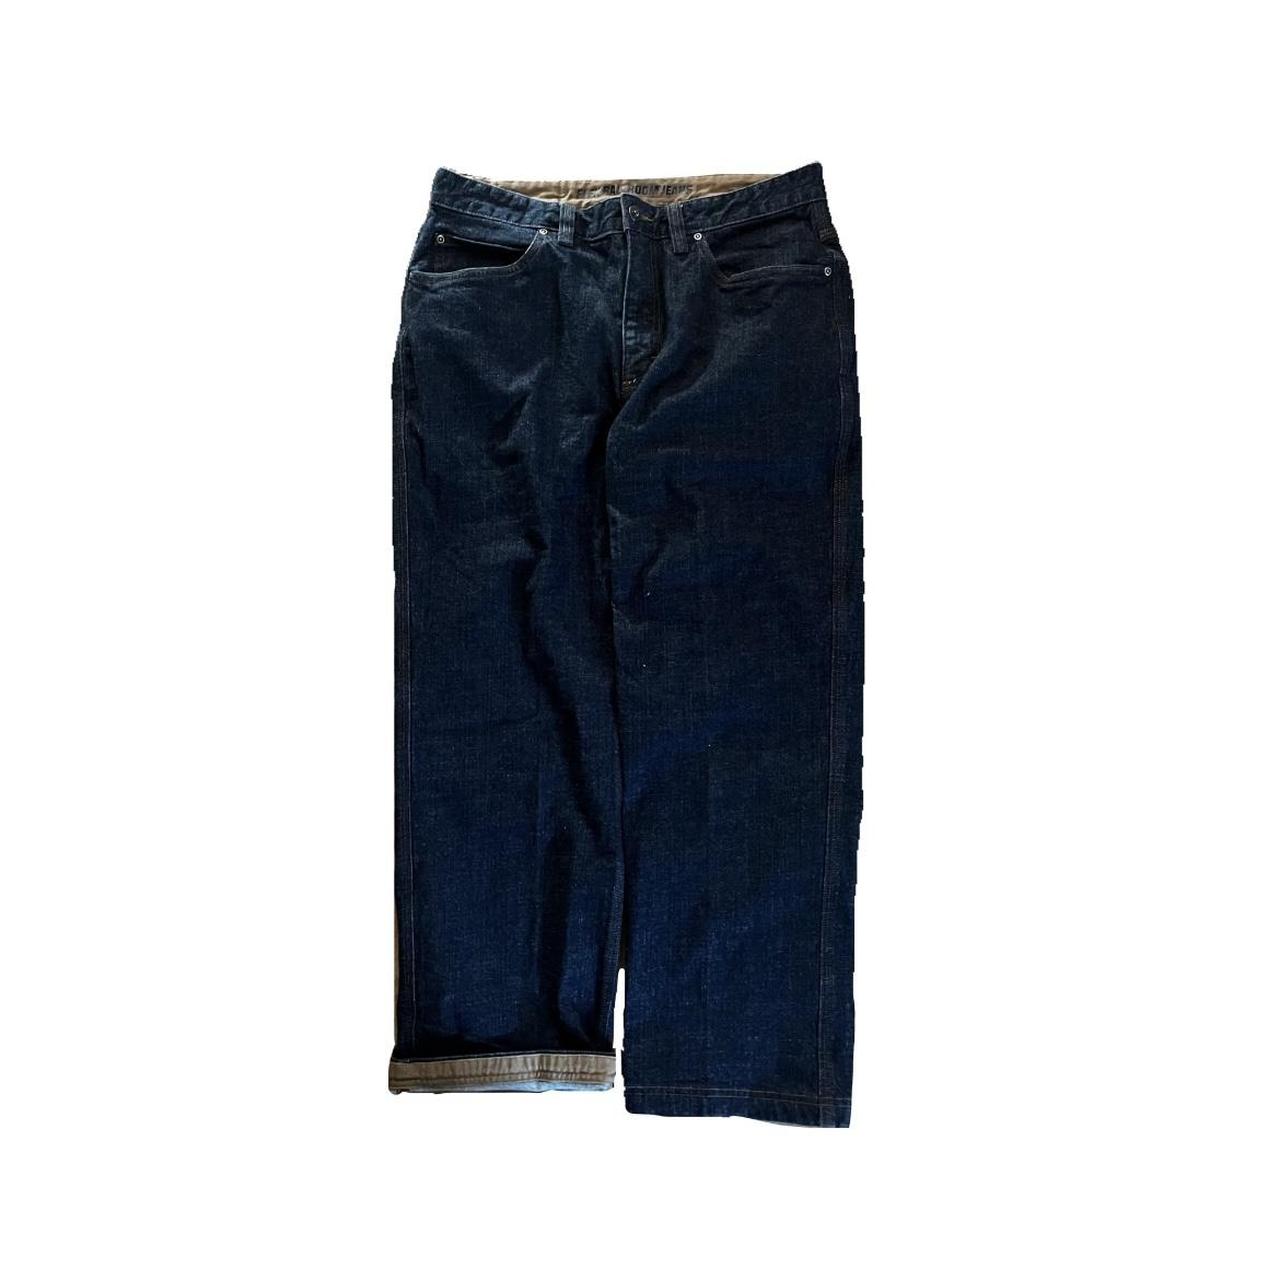 Dutch trading co baggy jeans 34x30 - Depop